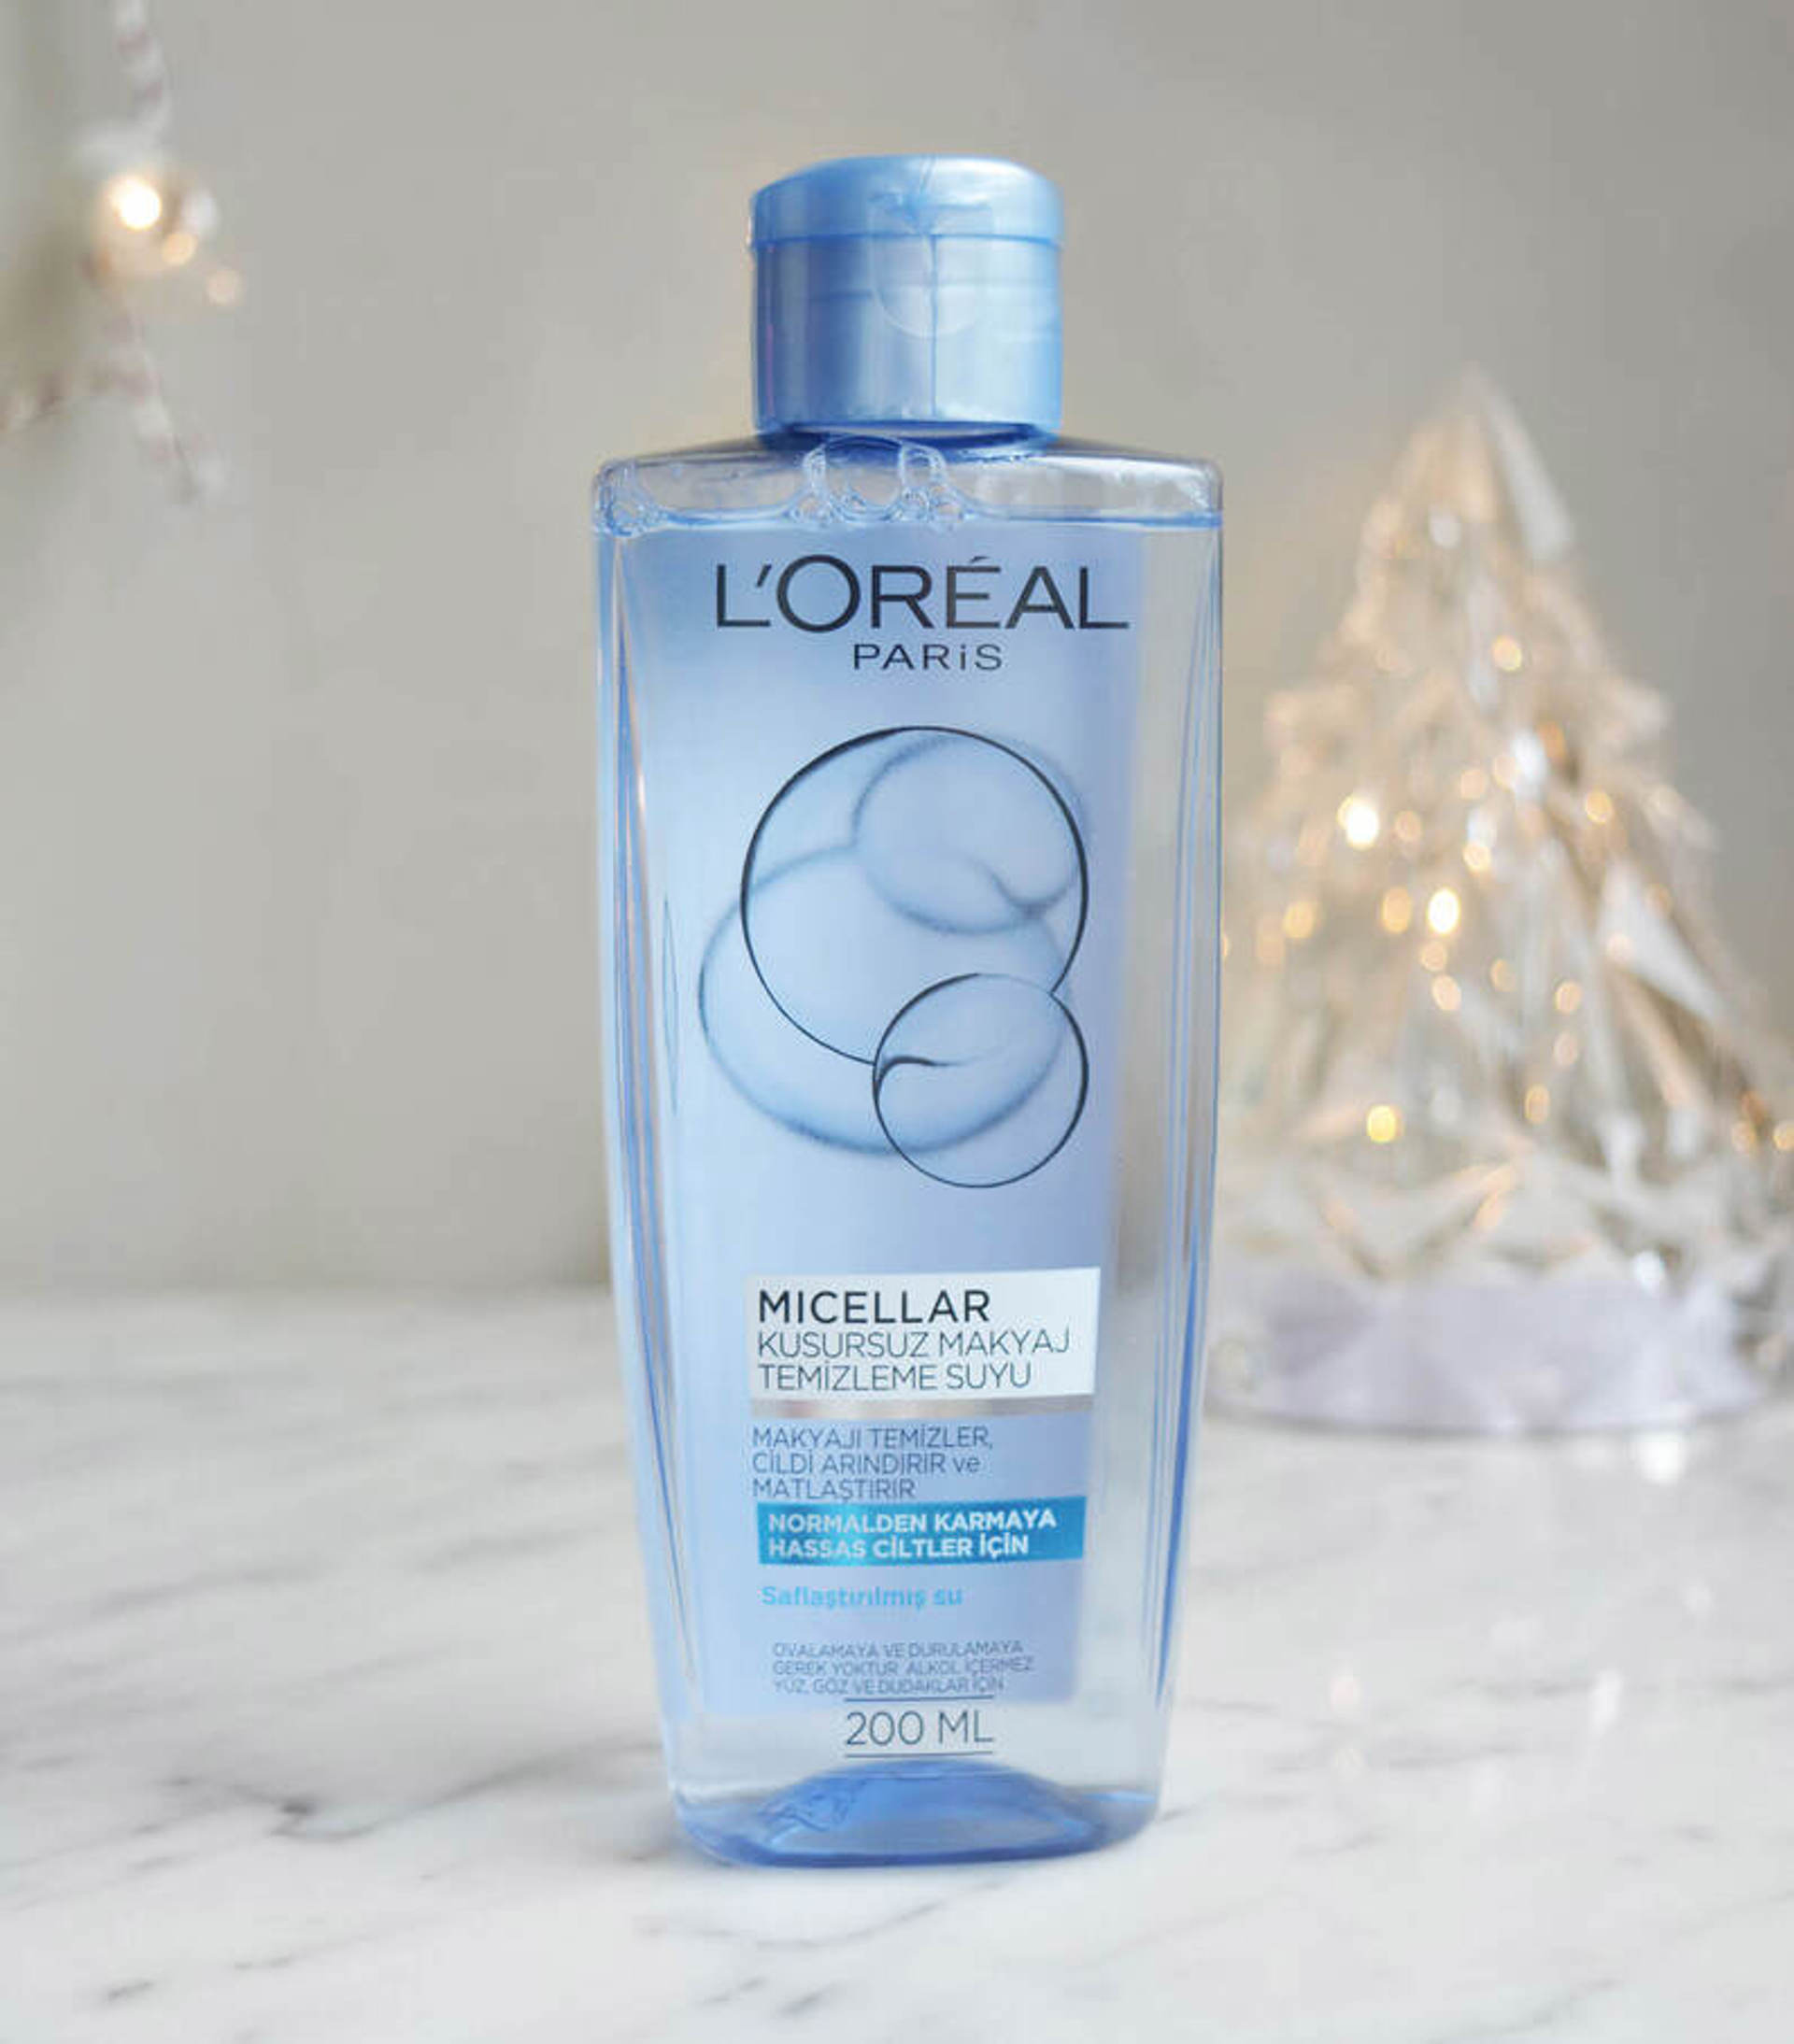 L’Oréal Paris Micellar Kusursuz Makyaj Temizleme Suyu Normalden Karmaya Hassas Ciltler